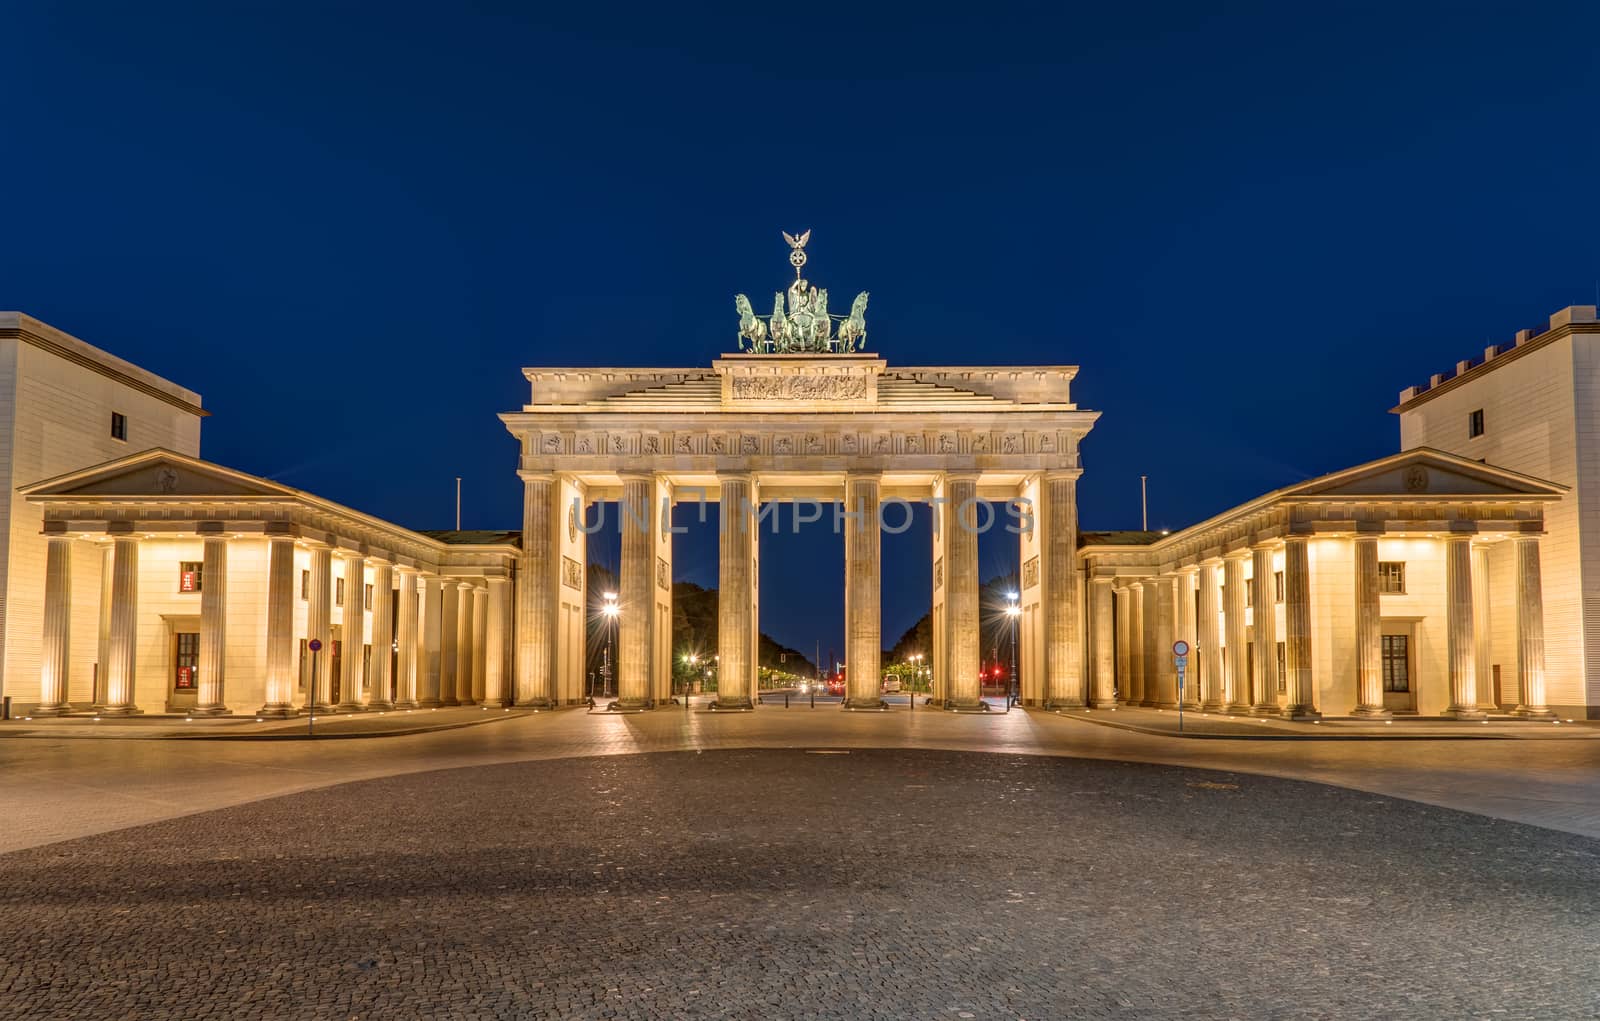 Berlins most famous landmark, the Brandenburger Tor, at night